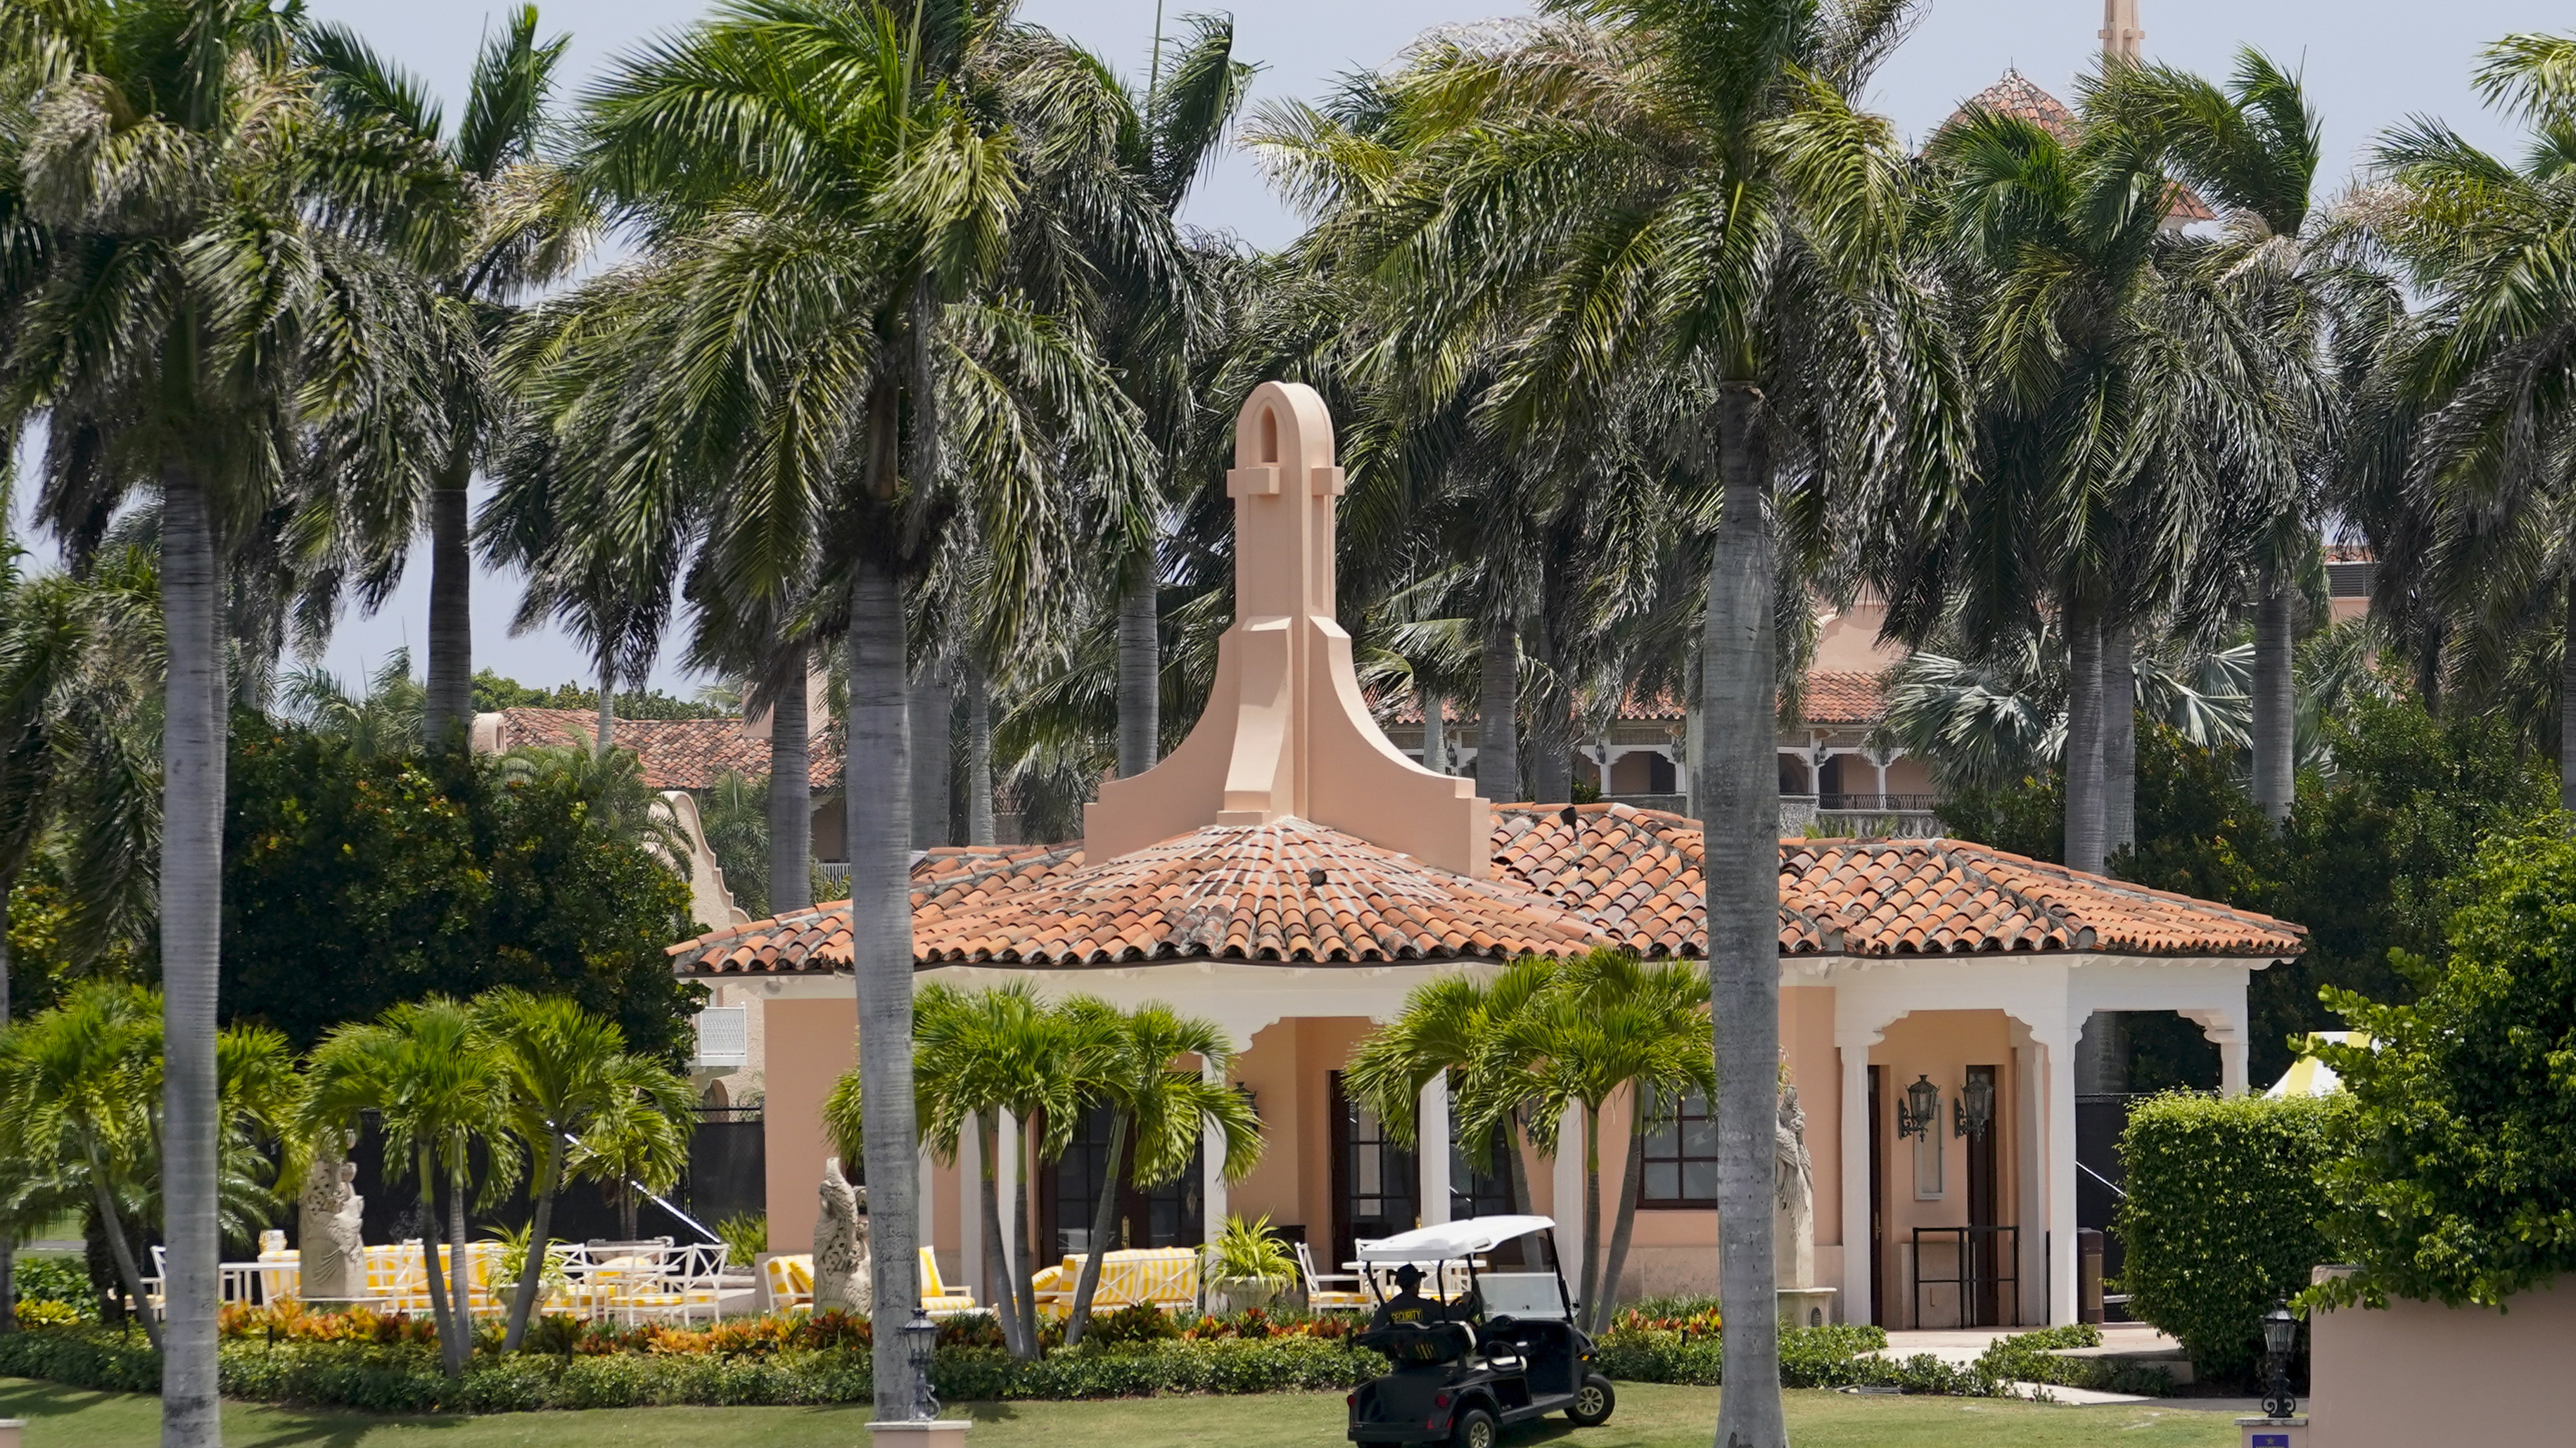 Seguridad se mueve en un carrito de golf en la finca Mar-a-Lago del expresidente Donald Trump en Palm Beach, Florida.